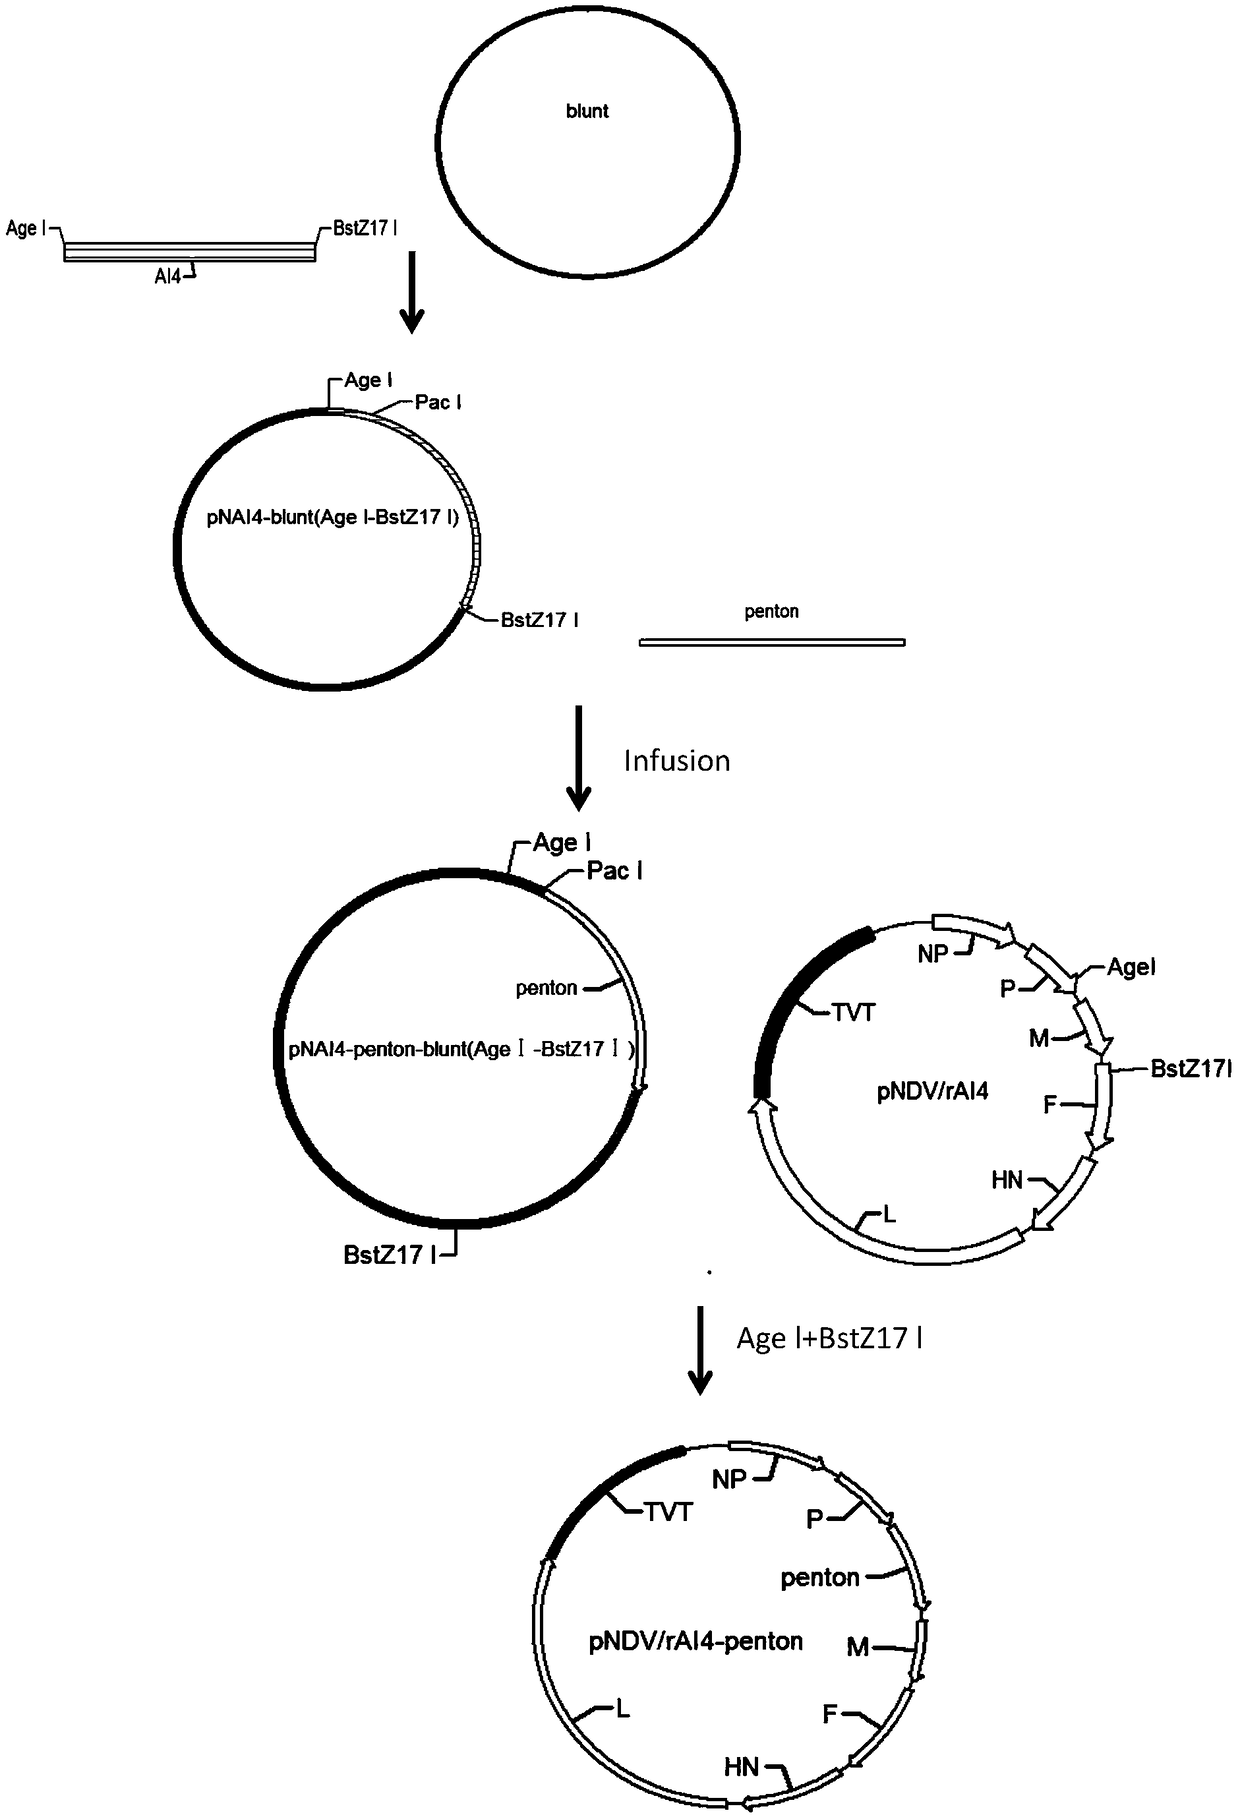 Recombinant newcastle disease vaccine candidate rAI4-penton to express avian adenovirus penton protein and construction method thereof